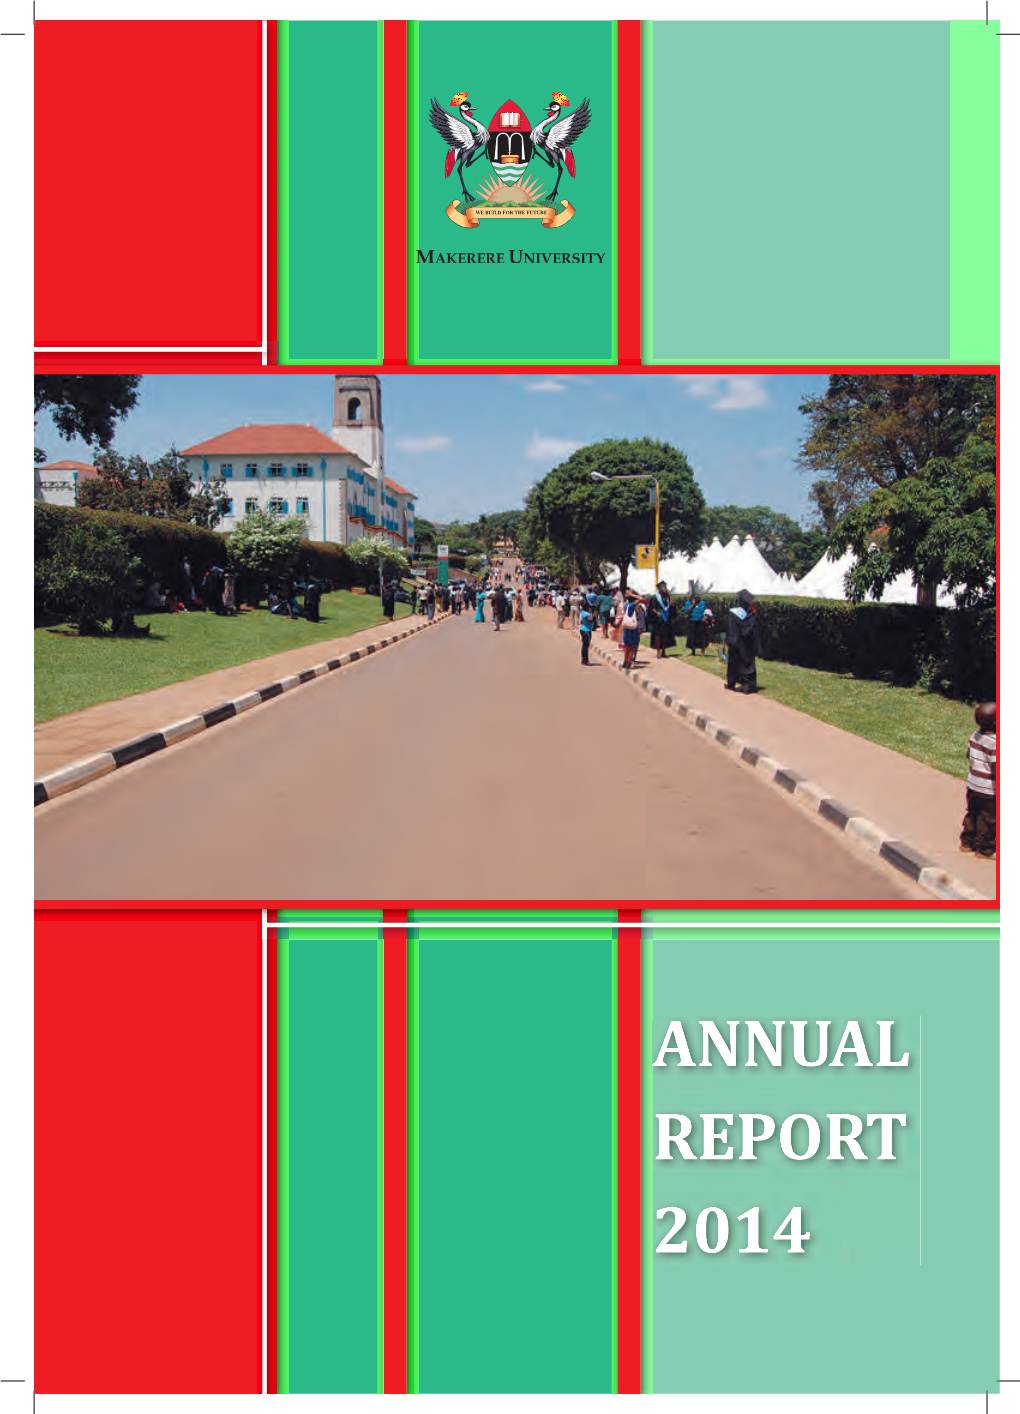 Makerere University Annual Report 2014